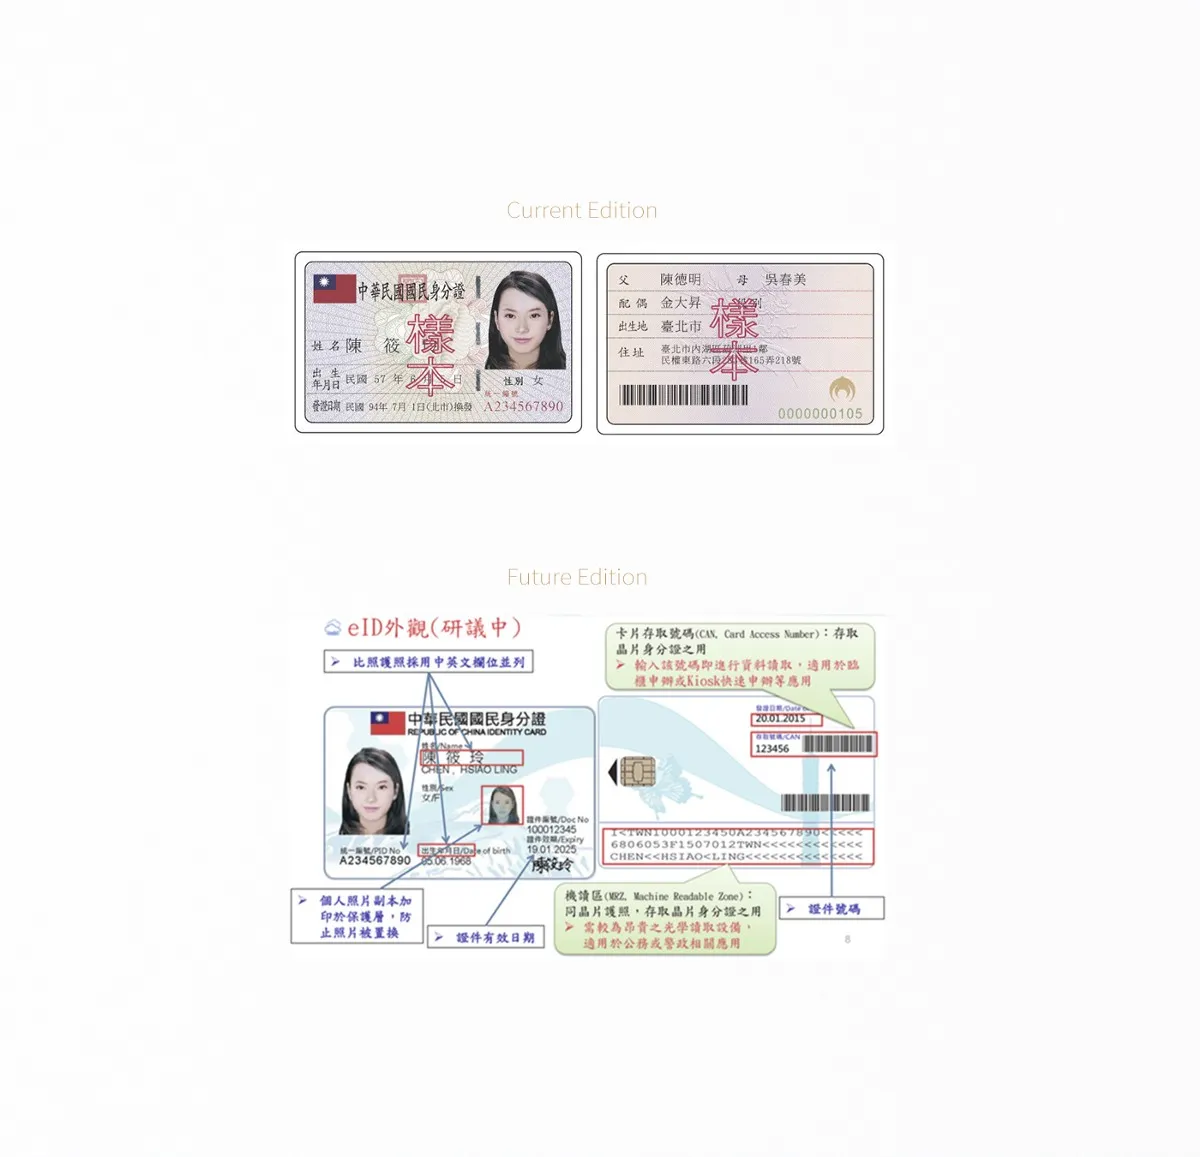 Current ID card design